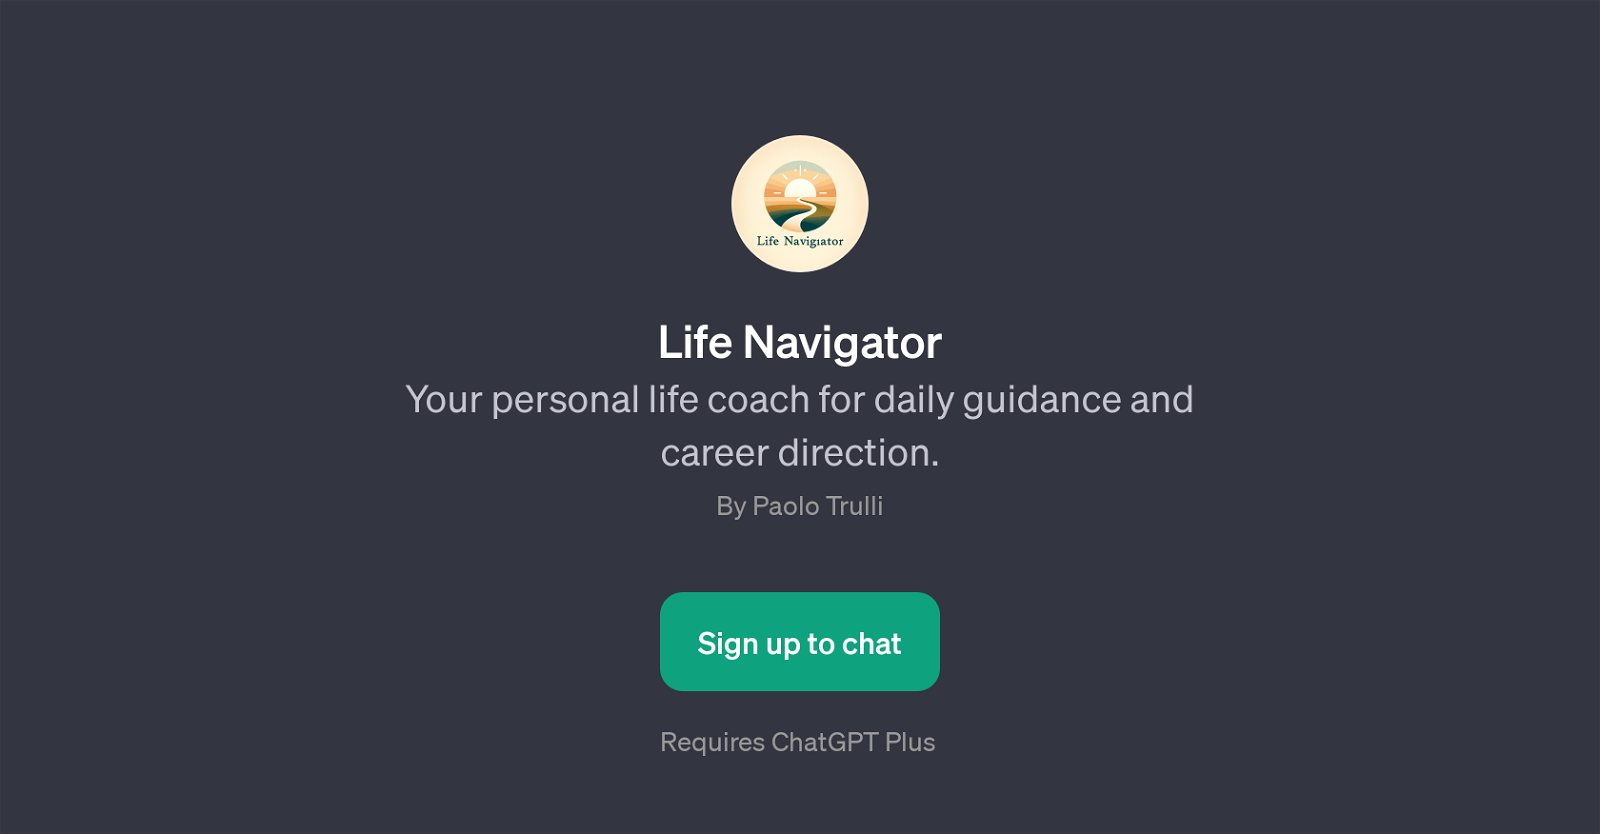 Life Navigator website